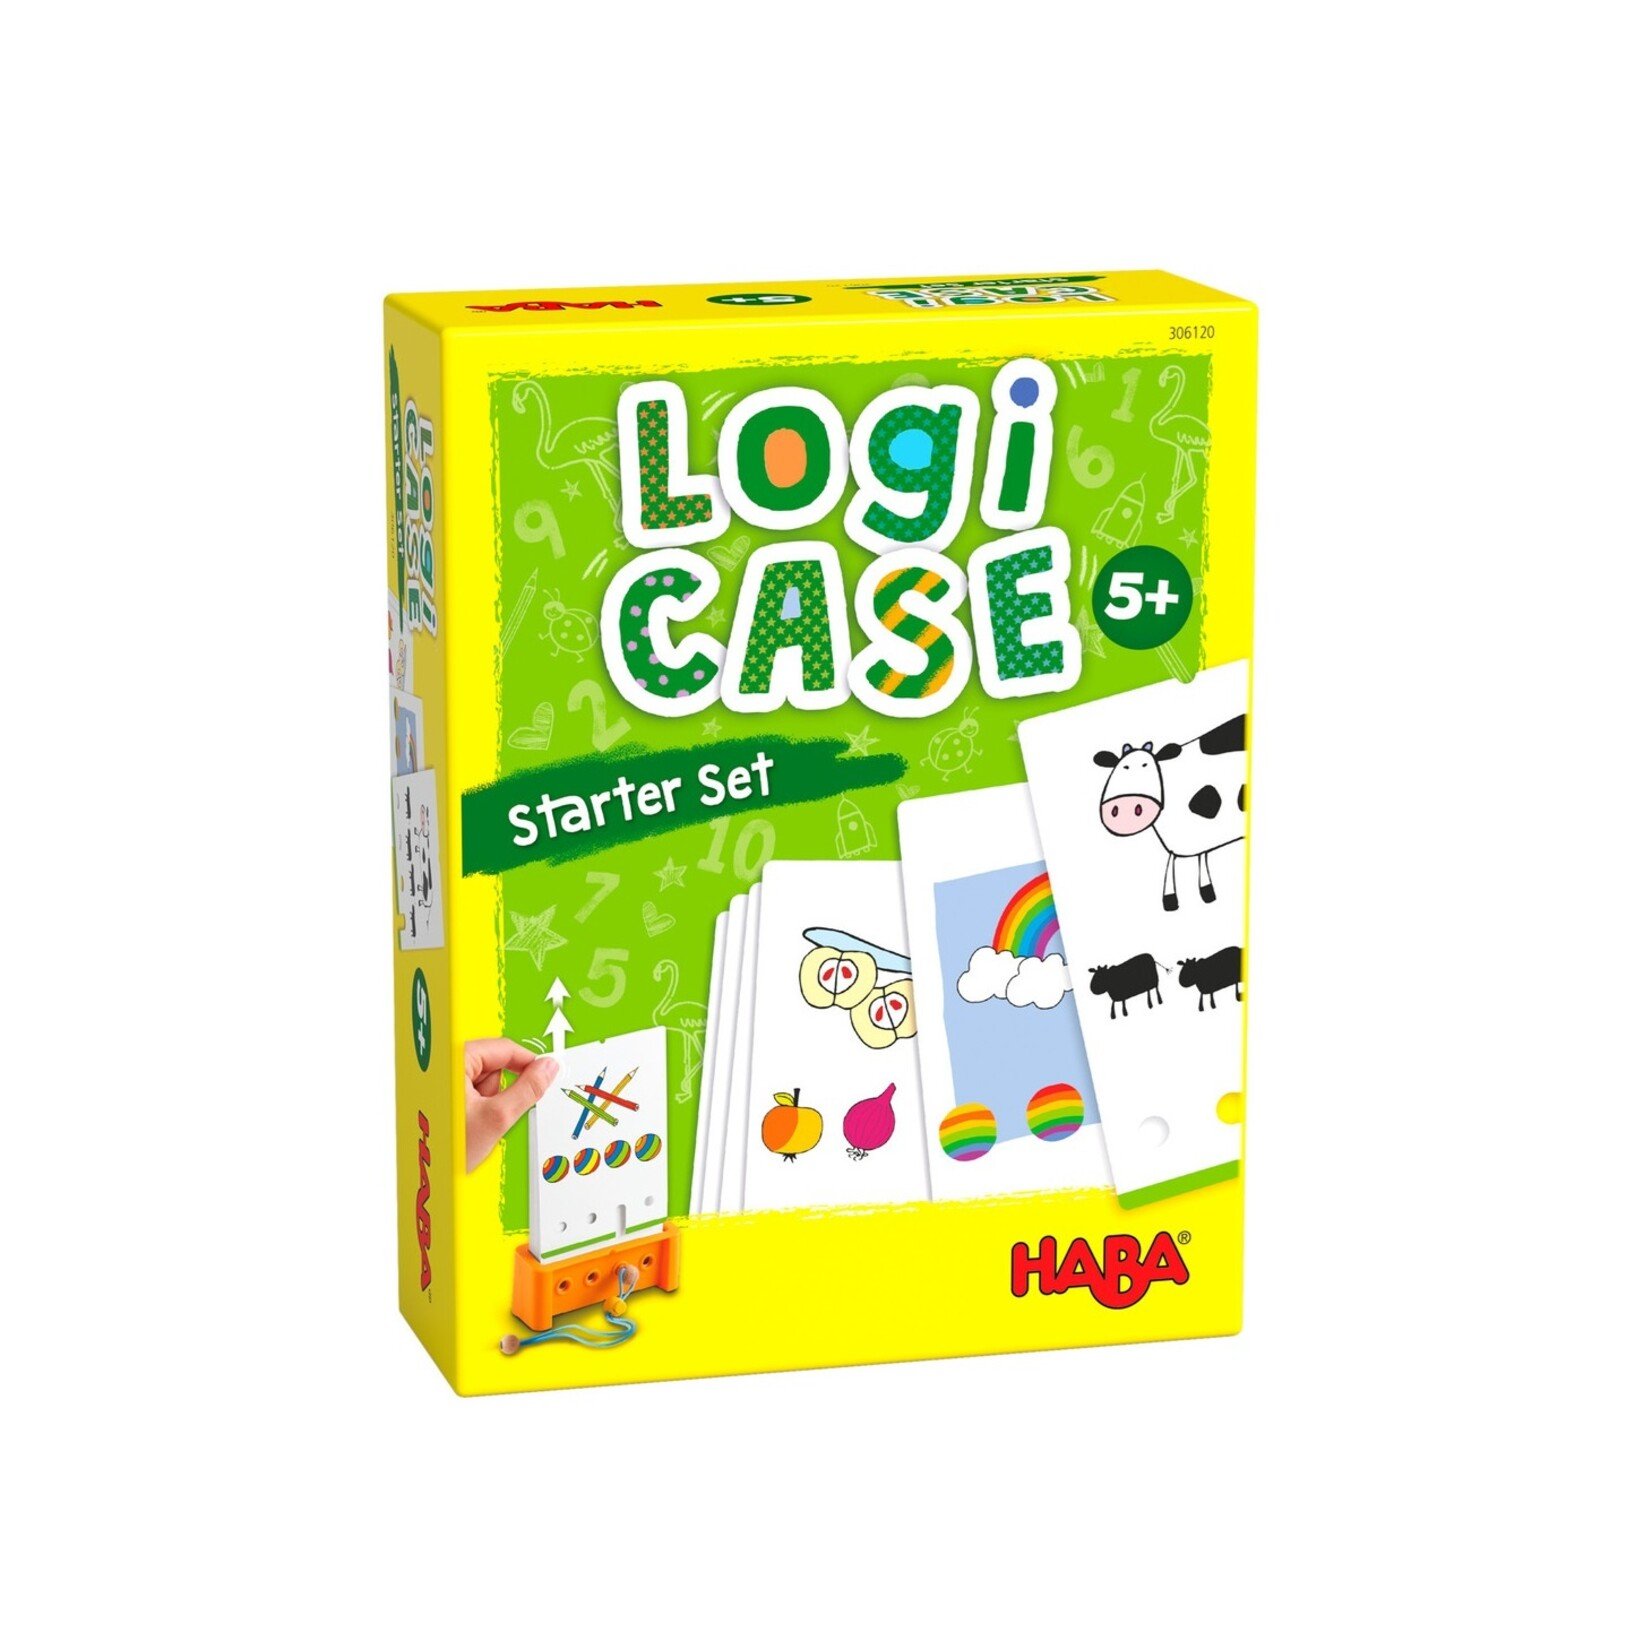 Haba Logic! Case starter 5+ (Multilingue)